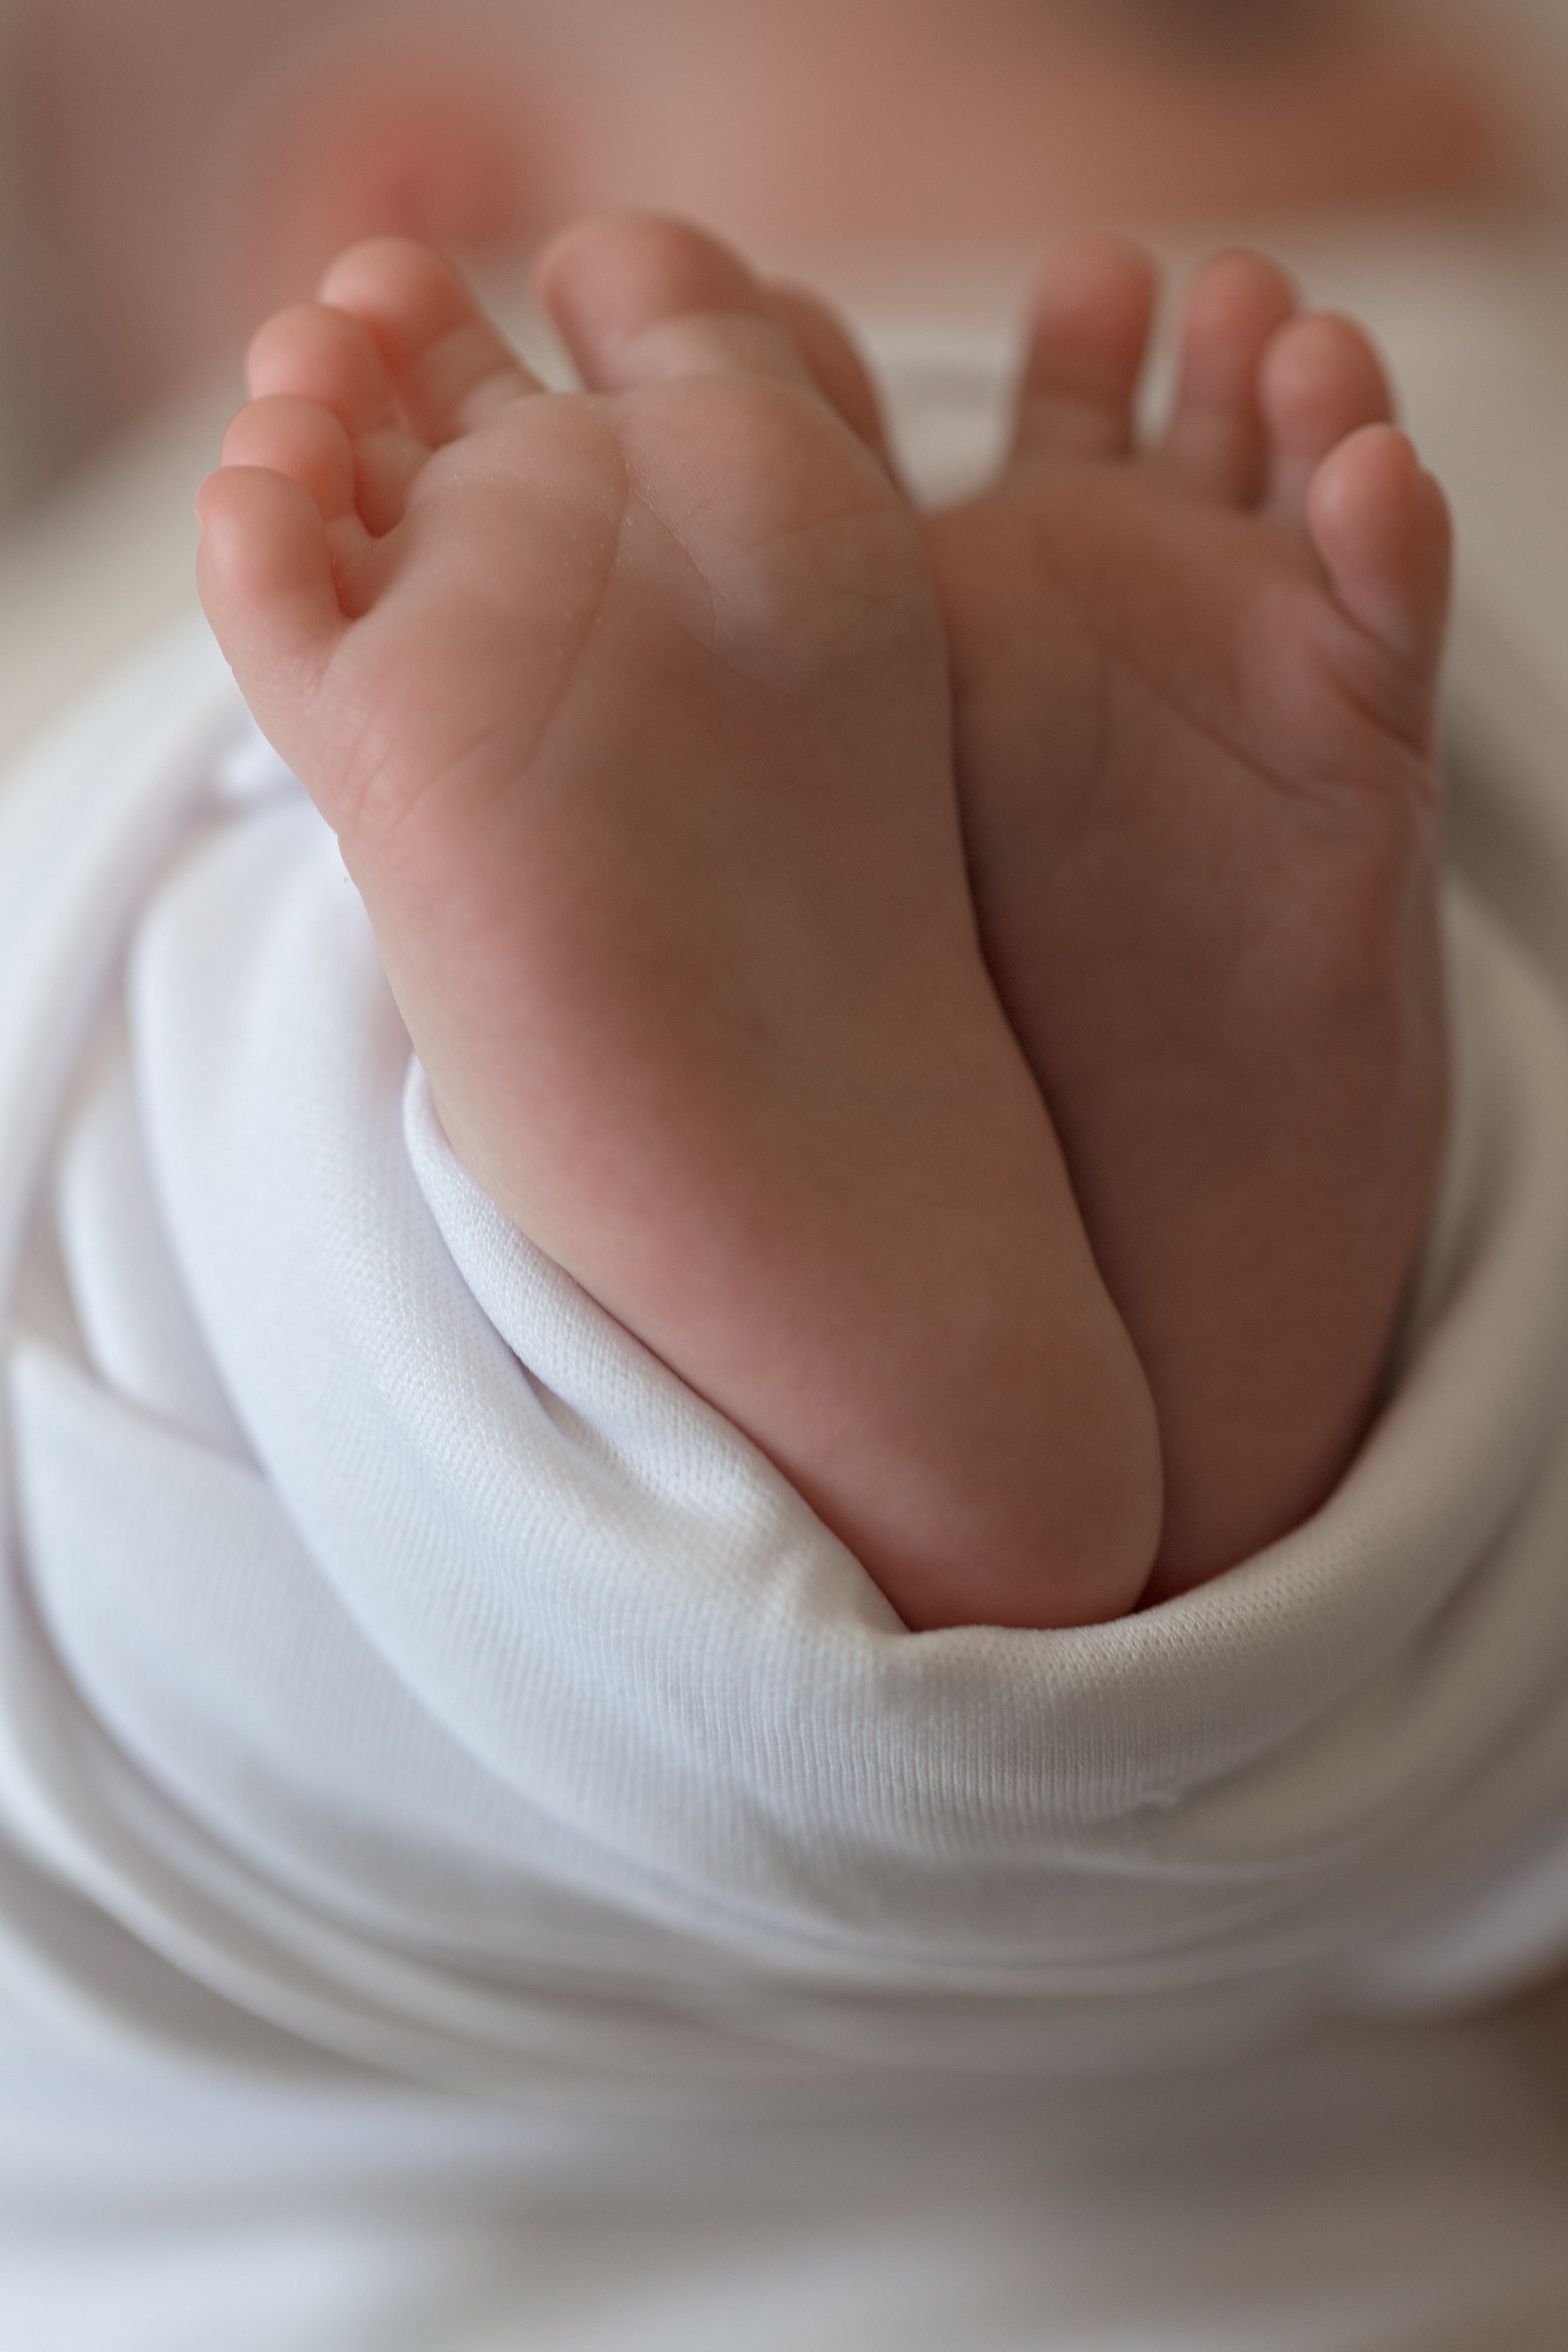 newborn baby feet close up